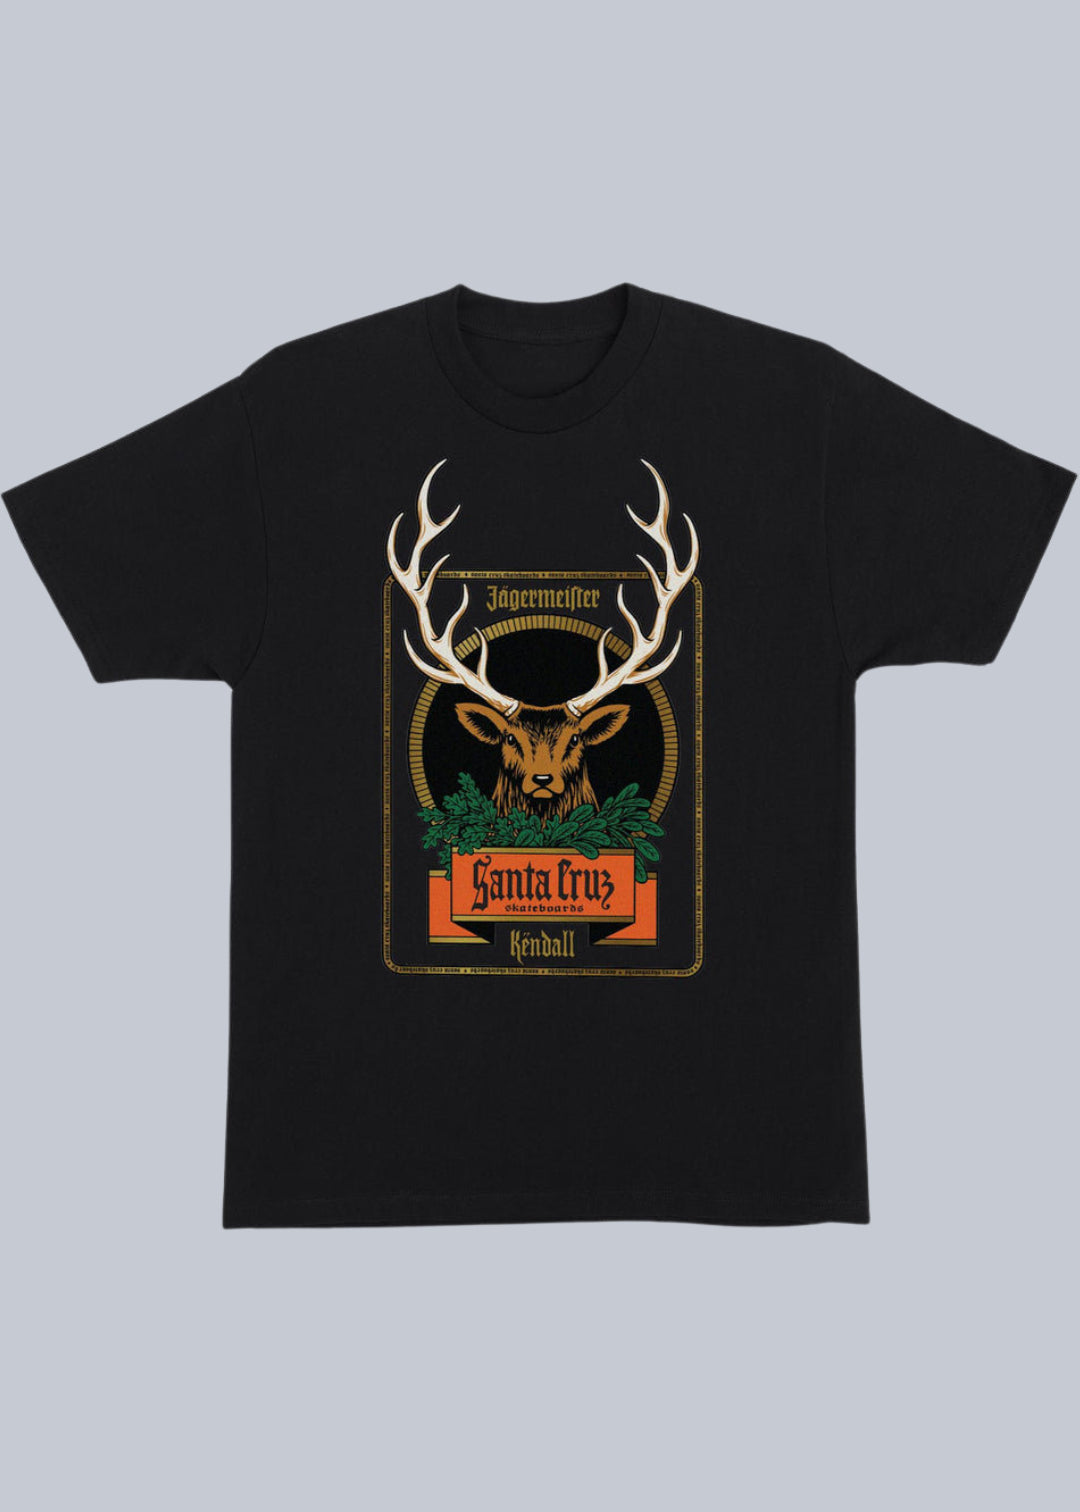 Santa Cruz Kendall Jagermeister T-Shirt Black